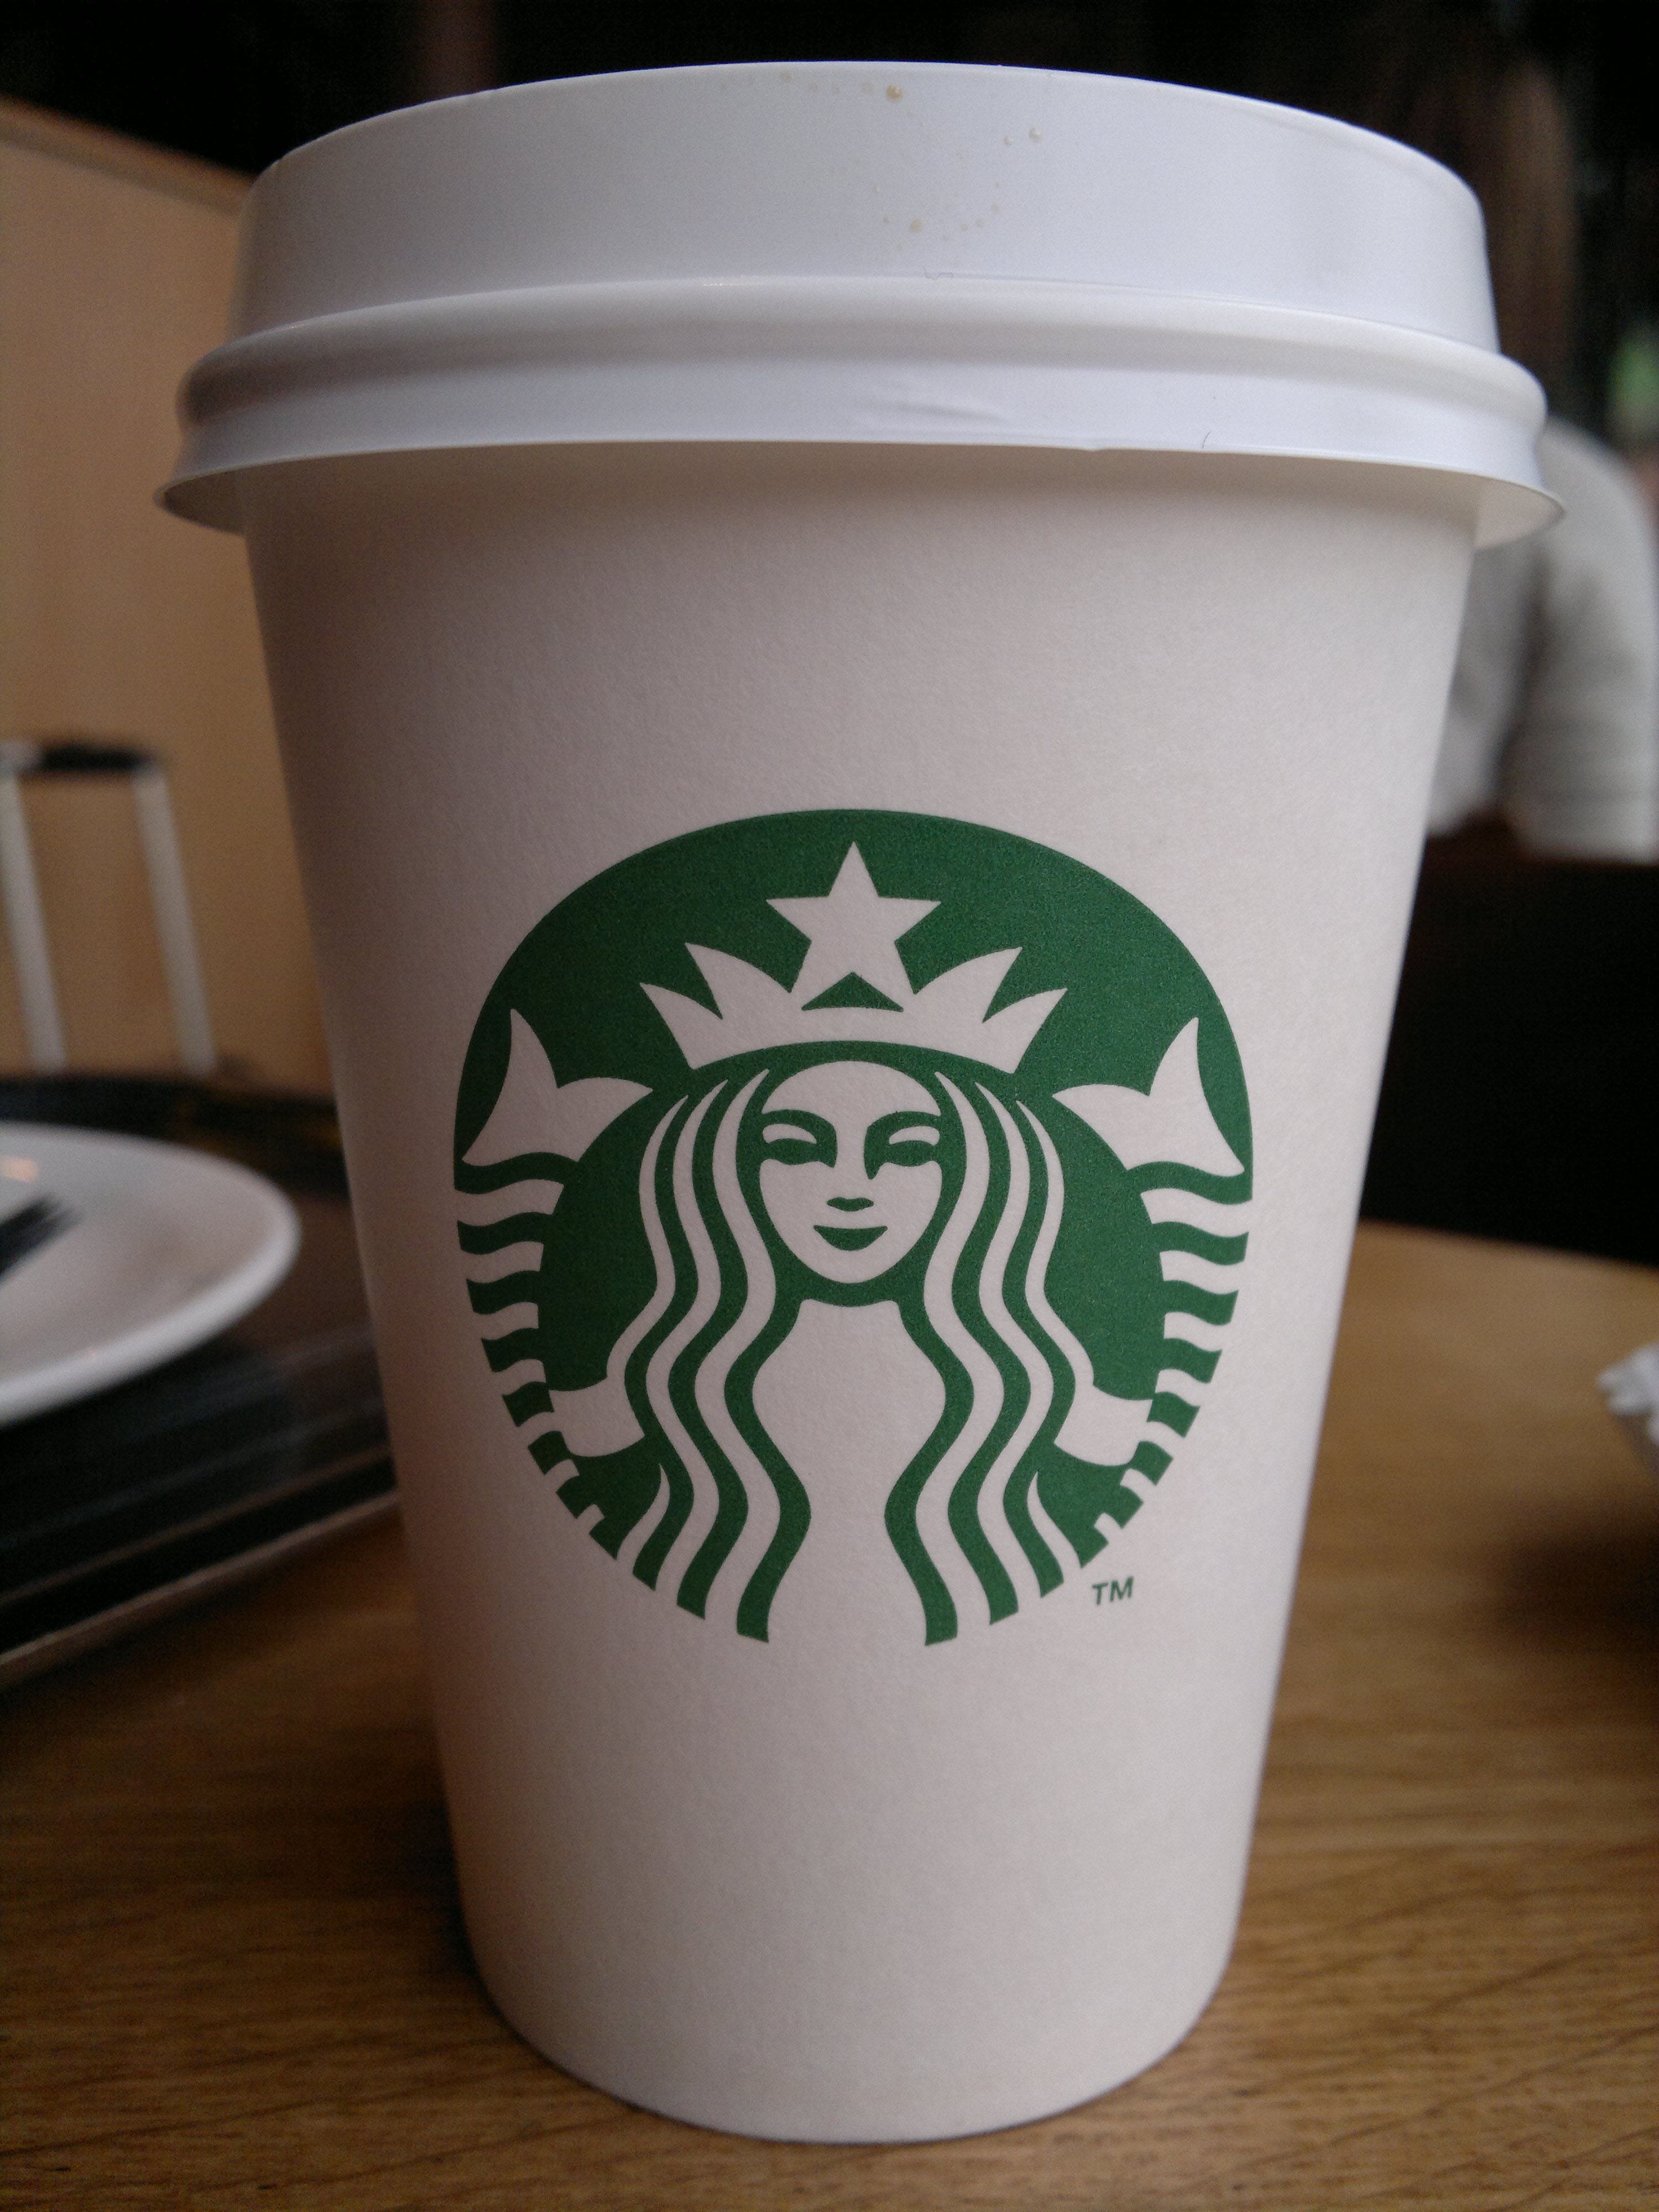 My Starbucks name is Ana.